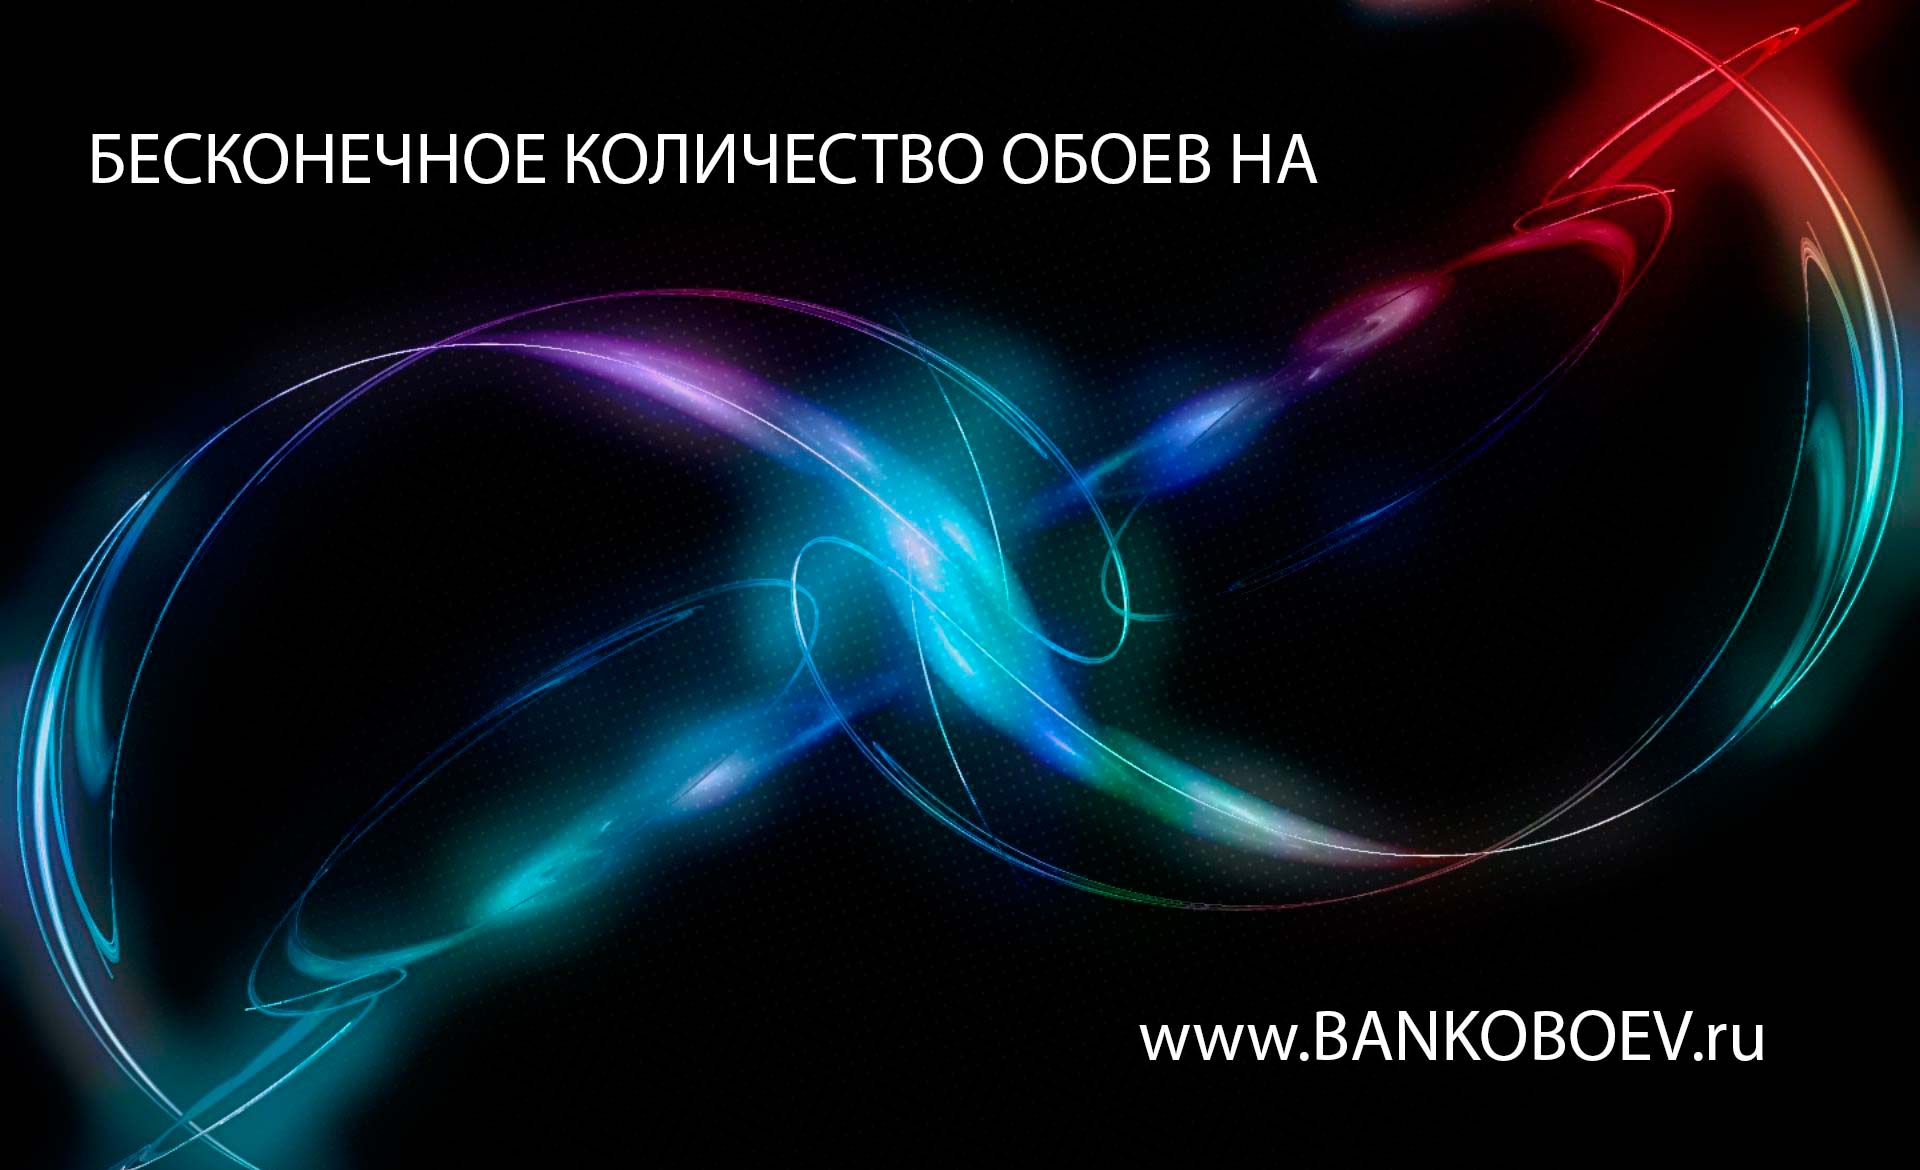 Bankoboev Ru Image Odywnzm Jpg